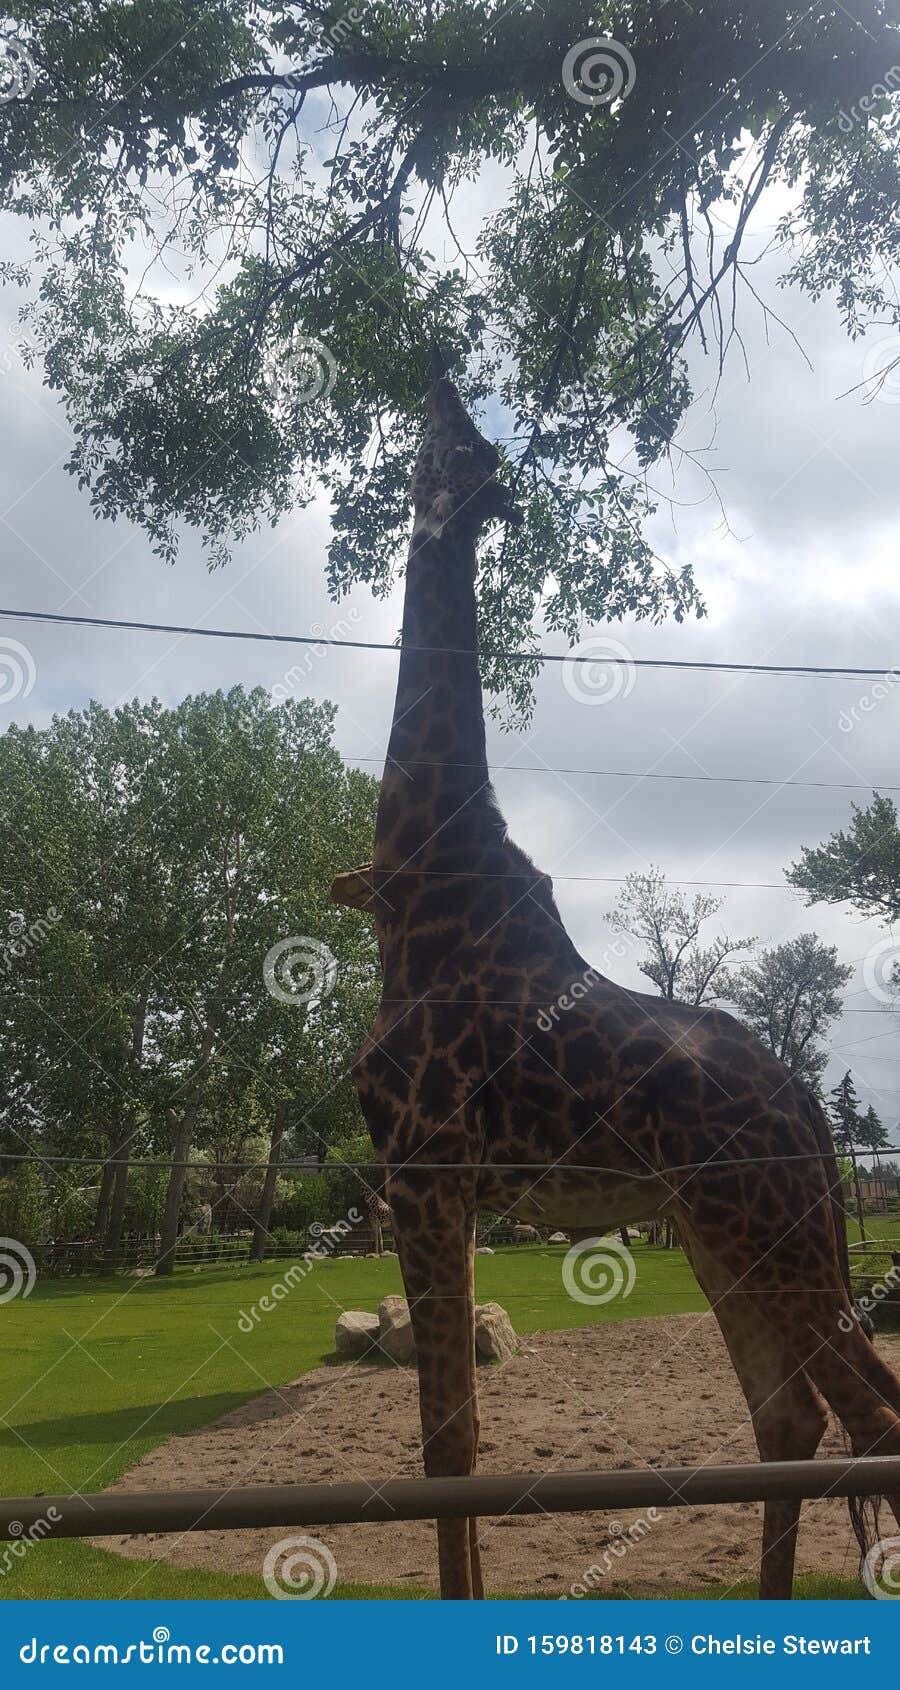 gina the giraffe gently grazing green leavss